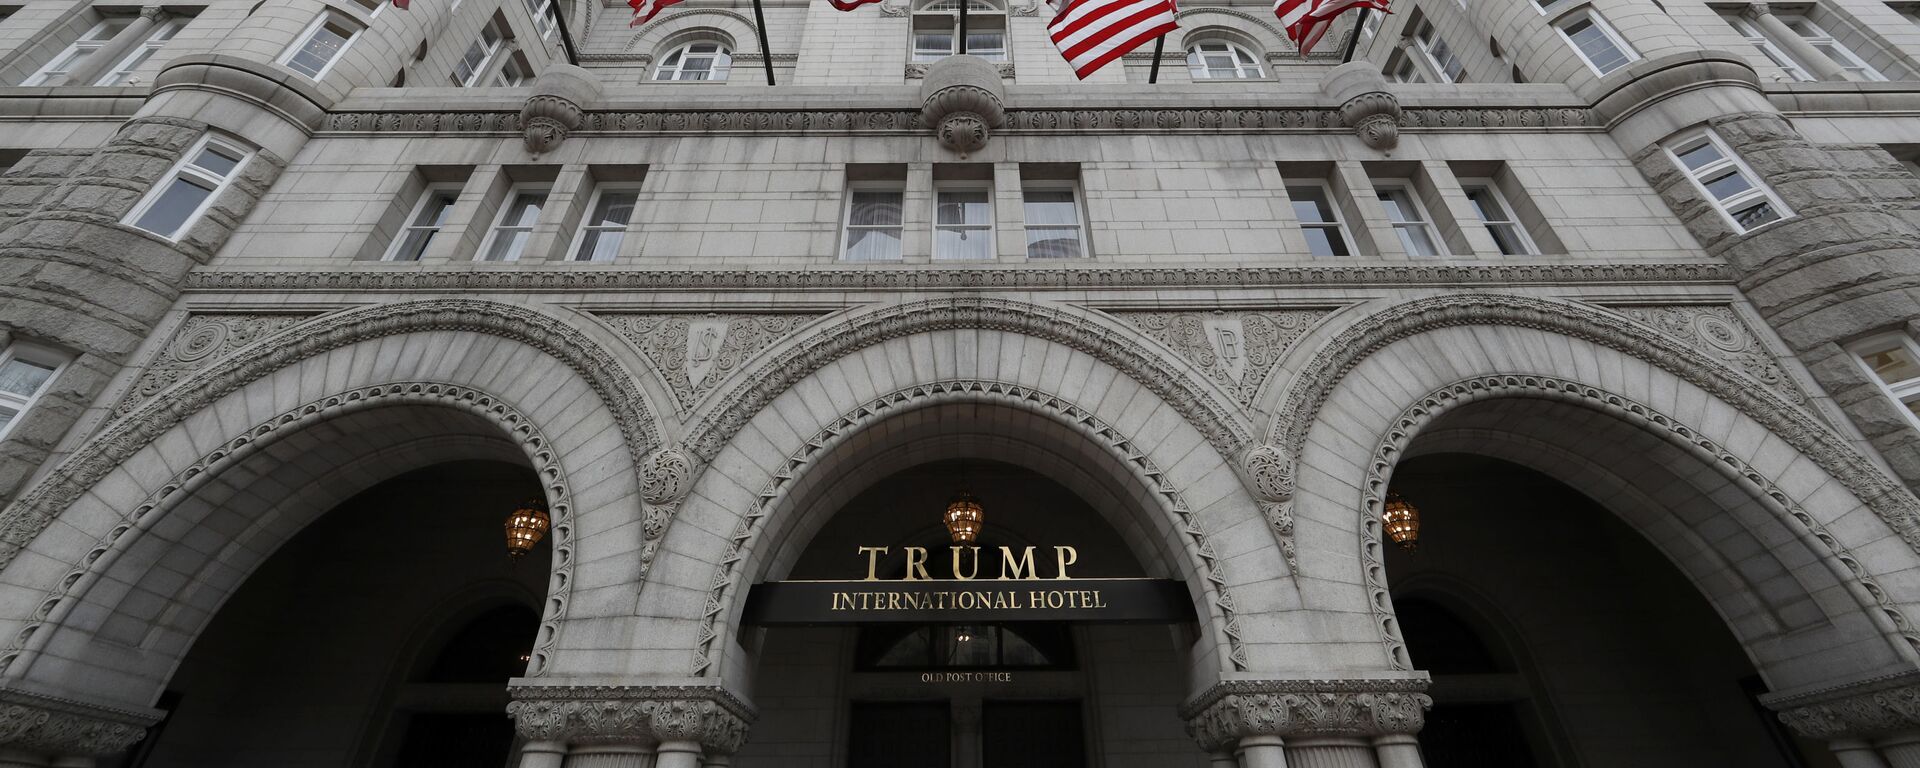 Trump International Hotel in Washington - Sputnik International, 1920, 22.05.2021